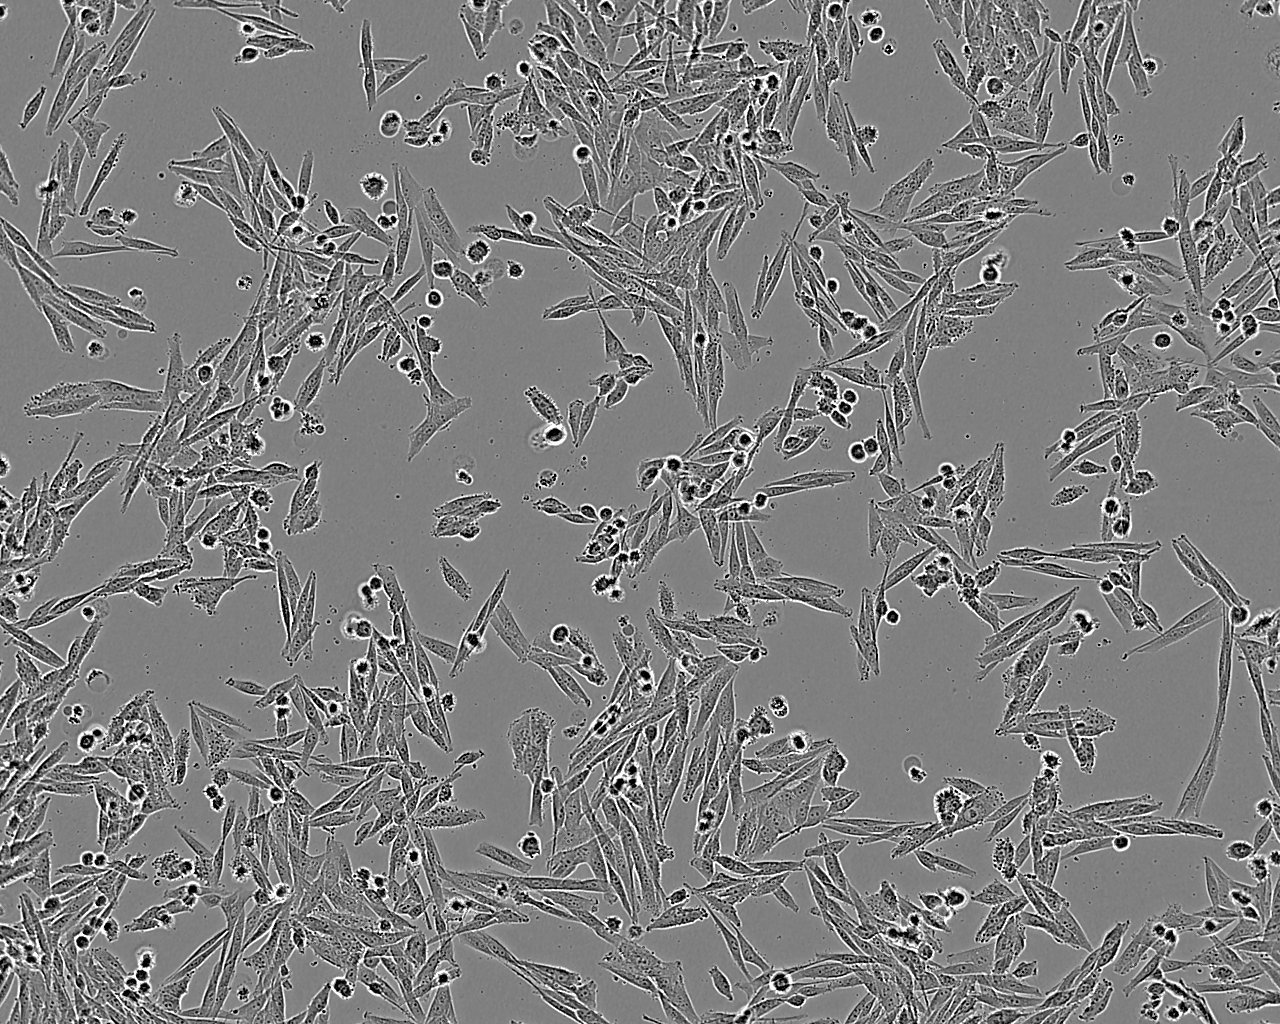 U-373MG ATCC epithelioid cells人胶质瘤细胞系,U-373MG ATCC epithelioid cells